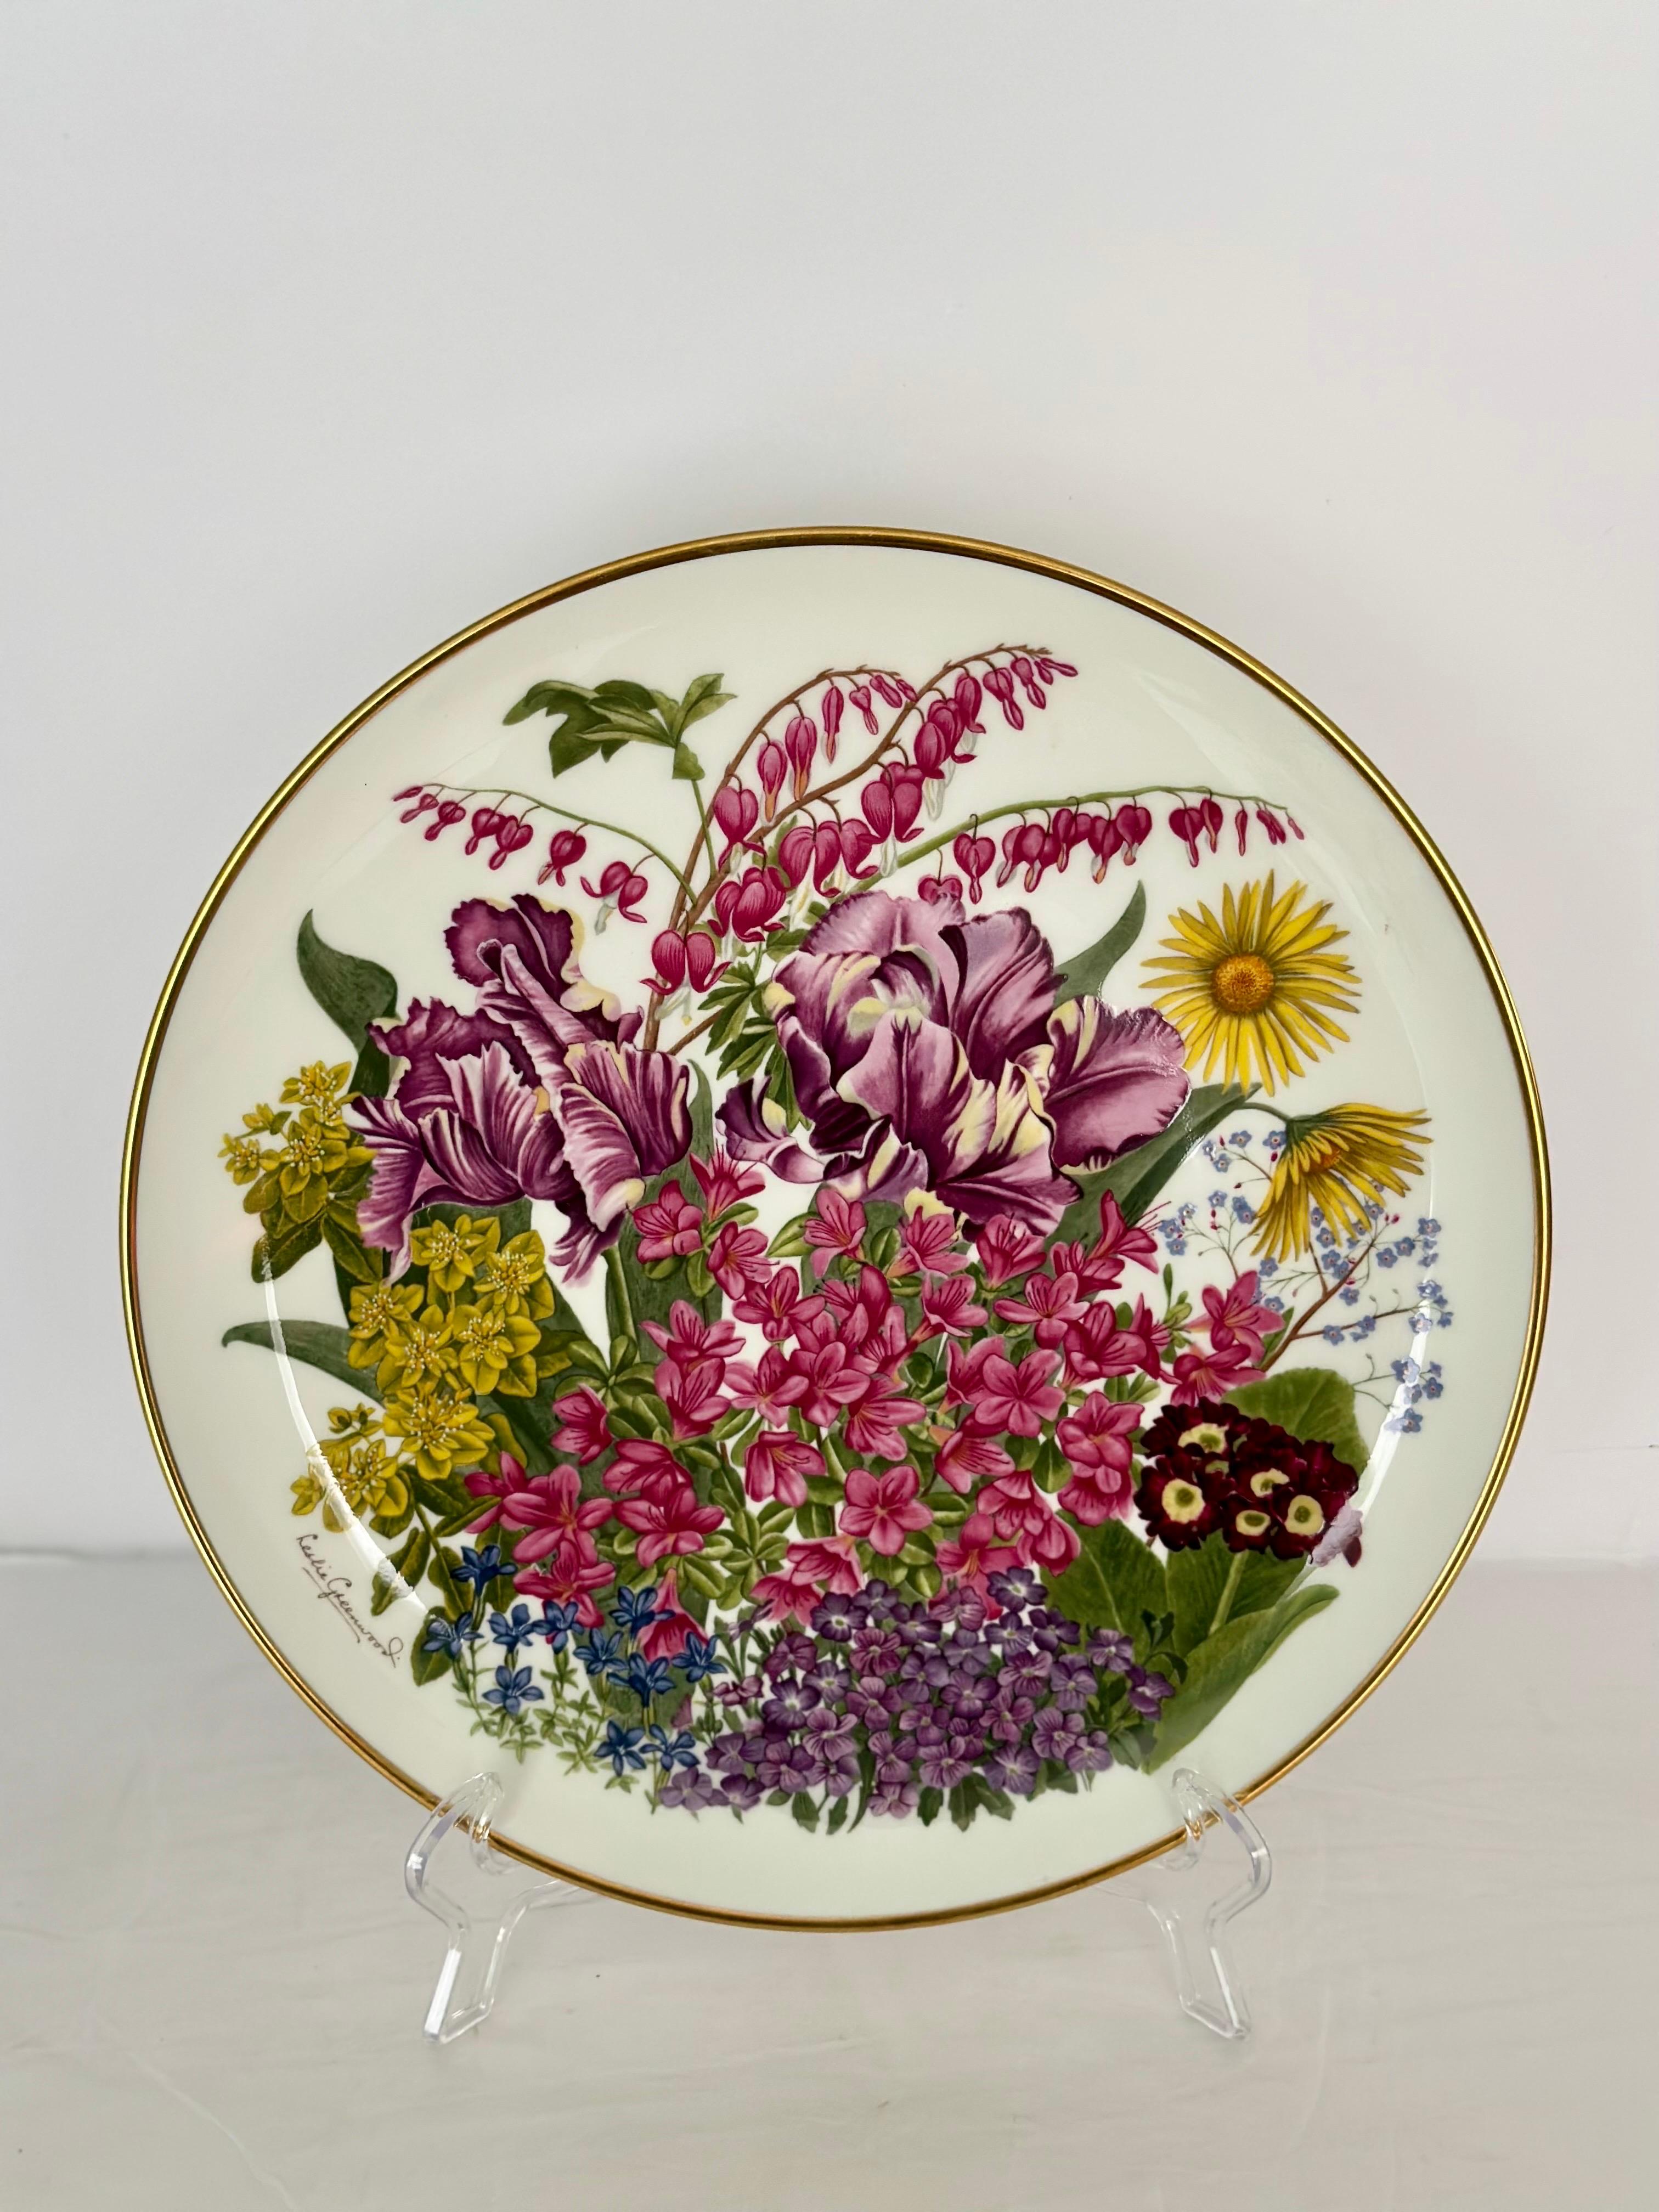 1970s England Wedgewood Porcelain Flower Plates – Set of 6  For Sale 1